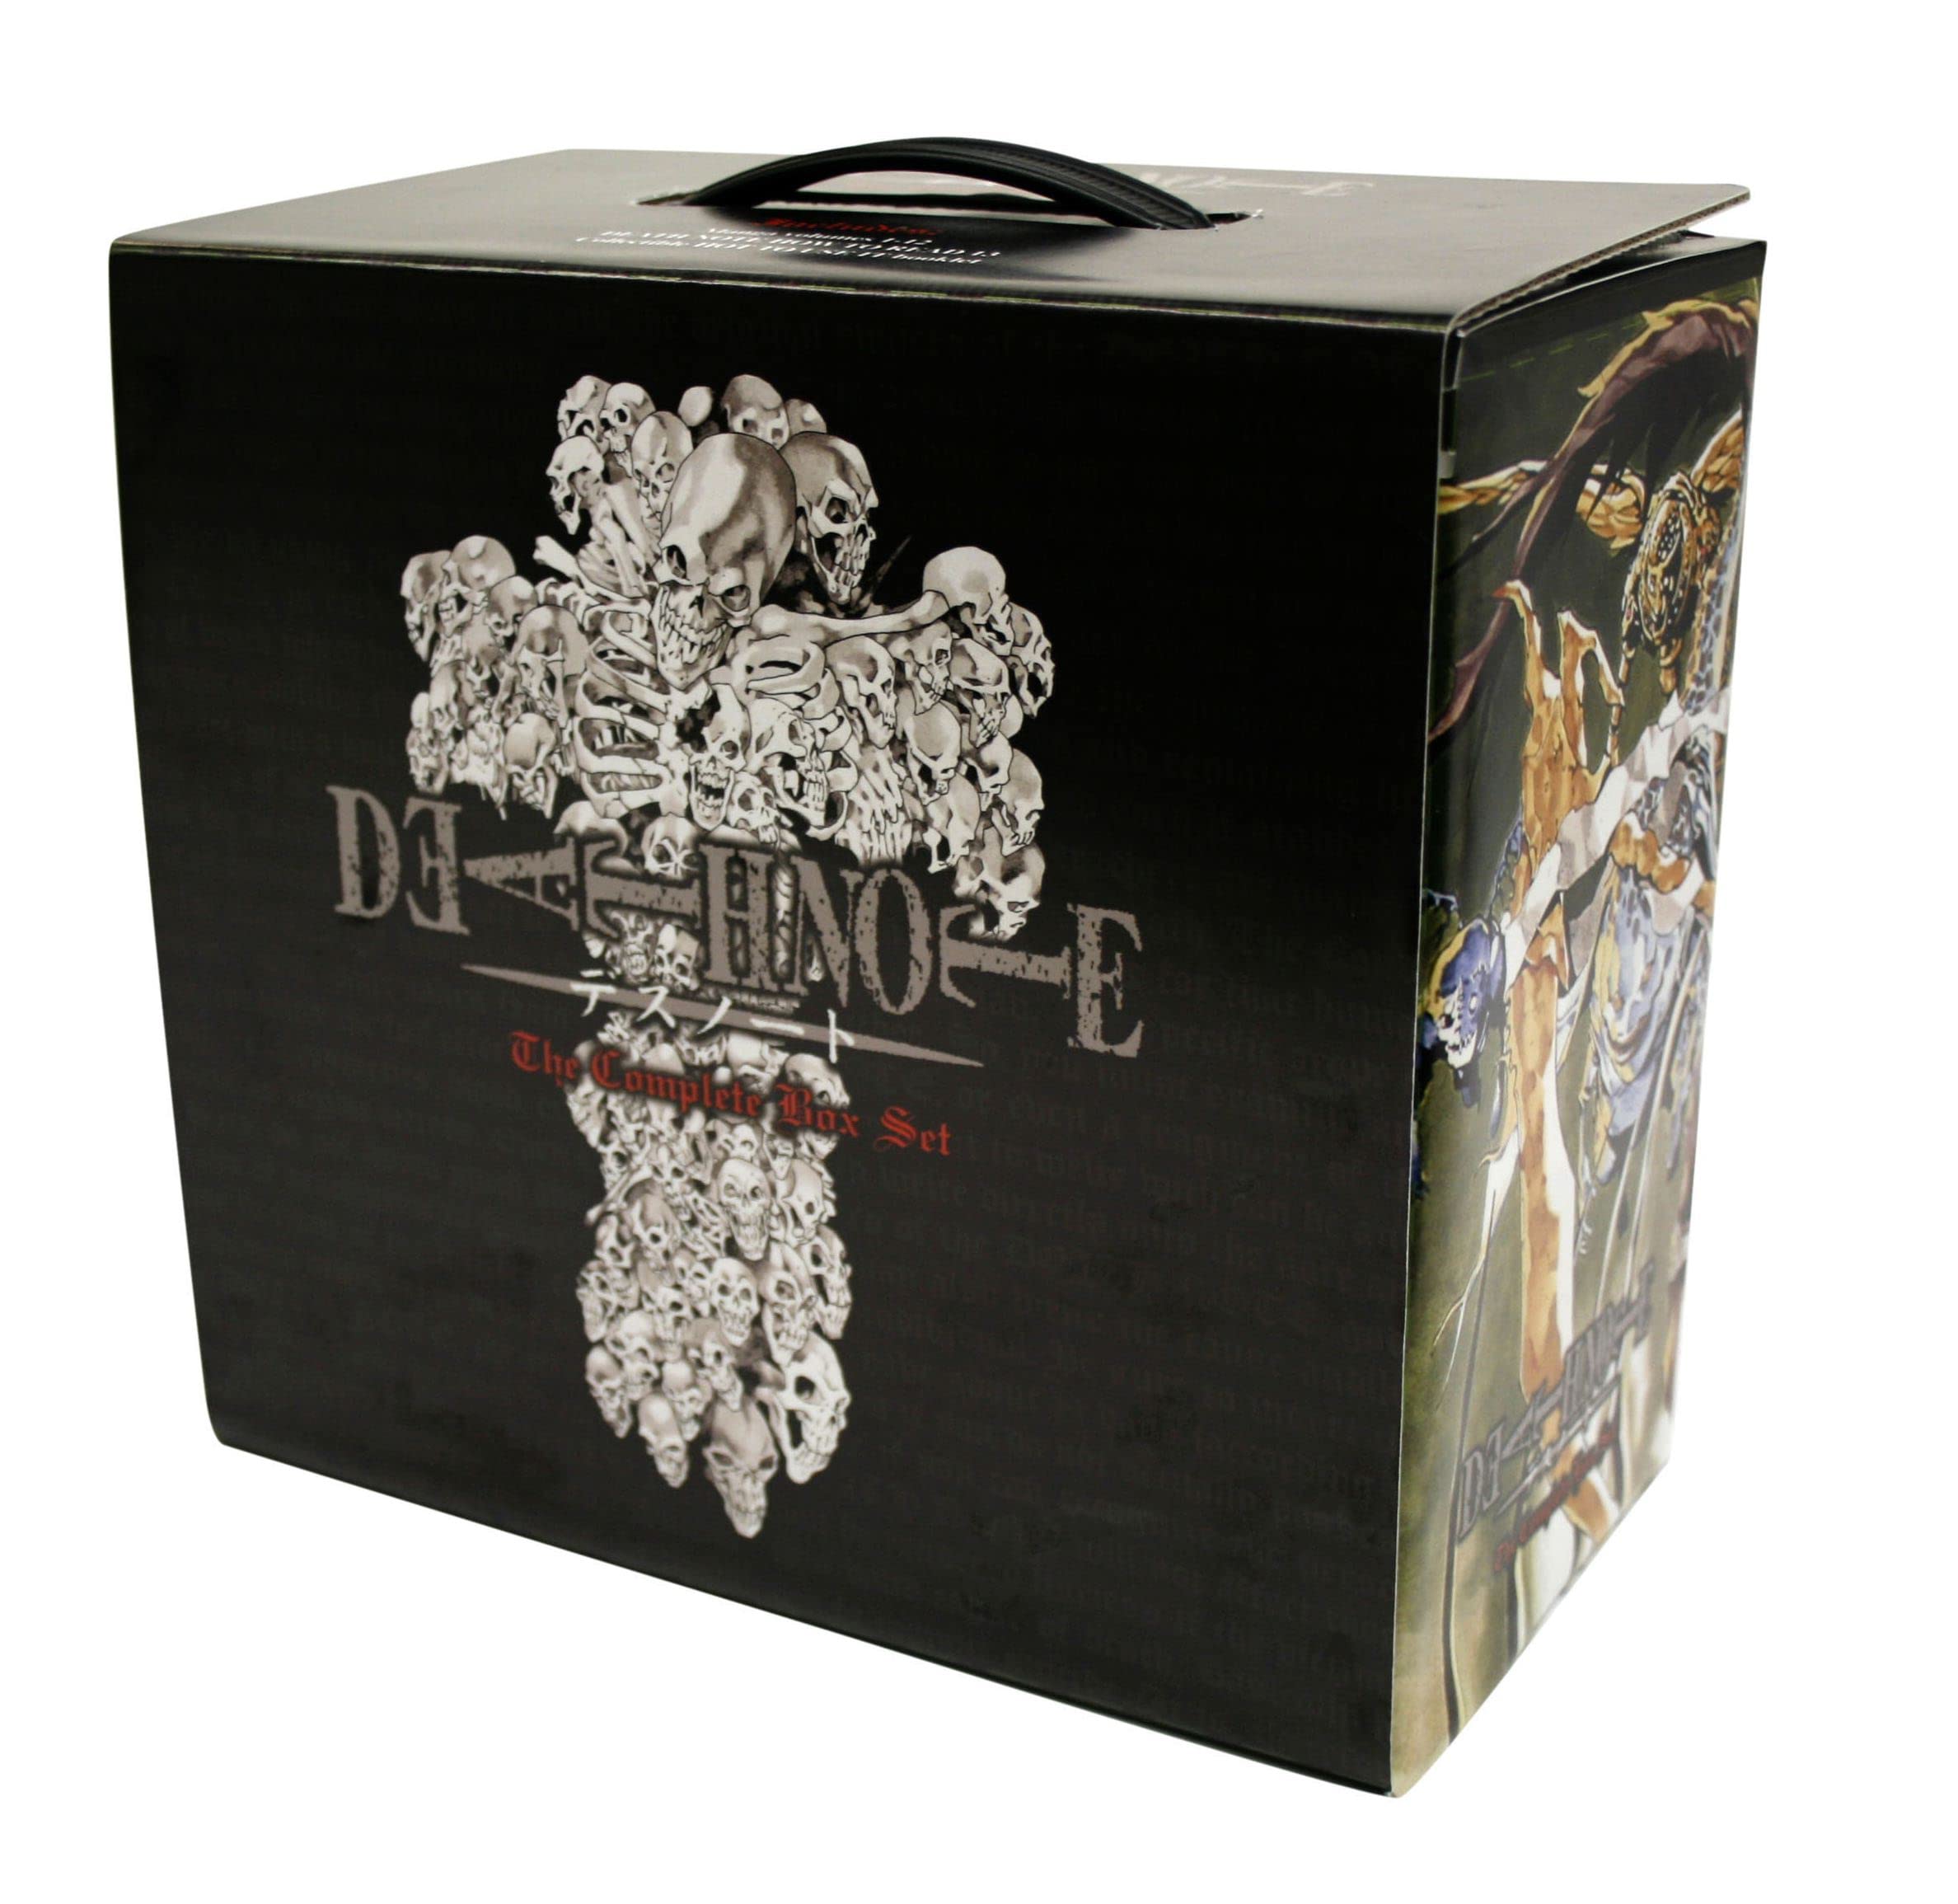 Death Note Complete Box Set (B)